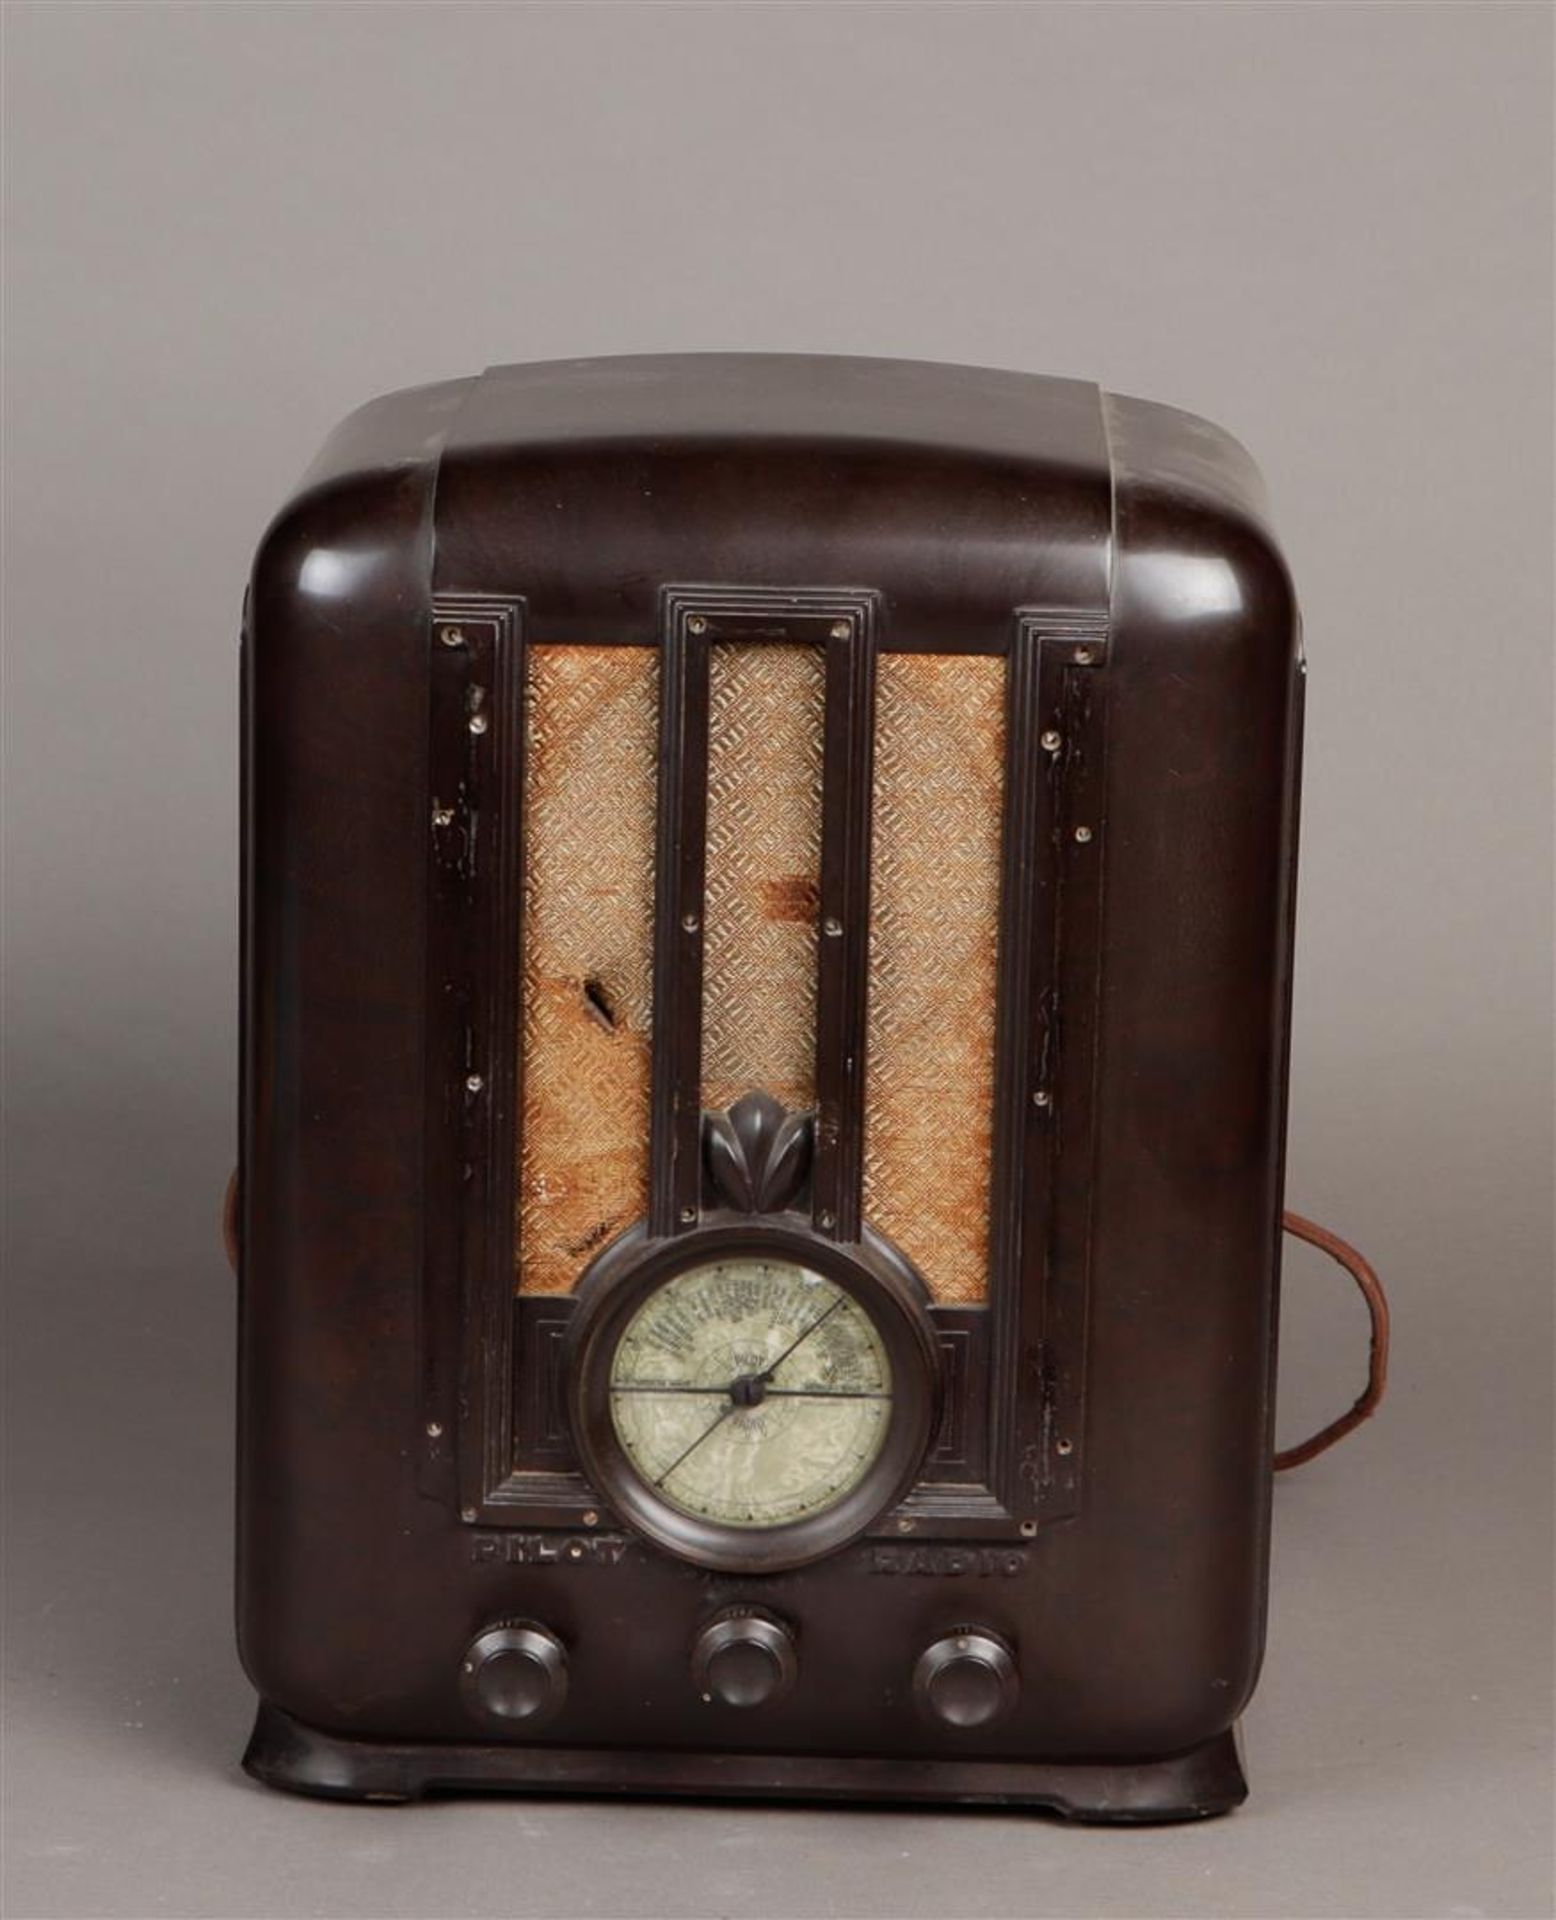 A bakelite radio, model "PILOT". Approx. 1930.